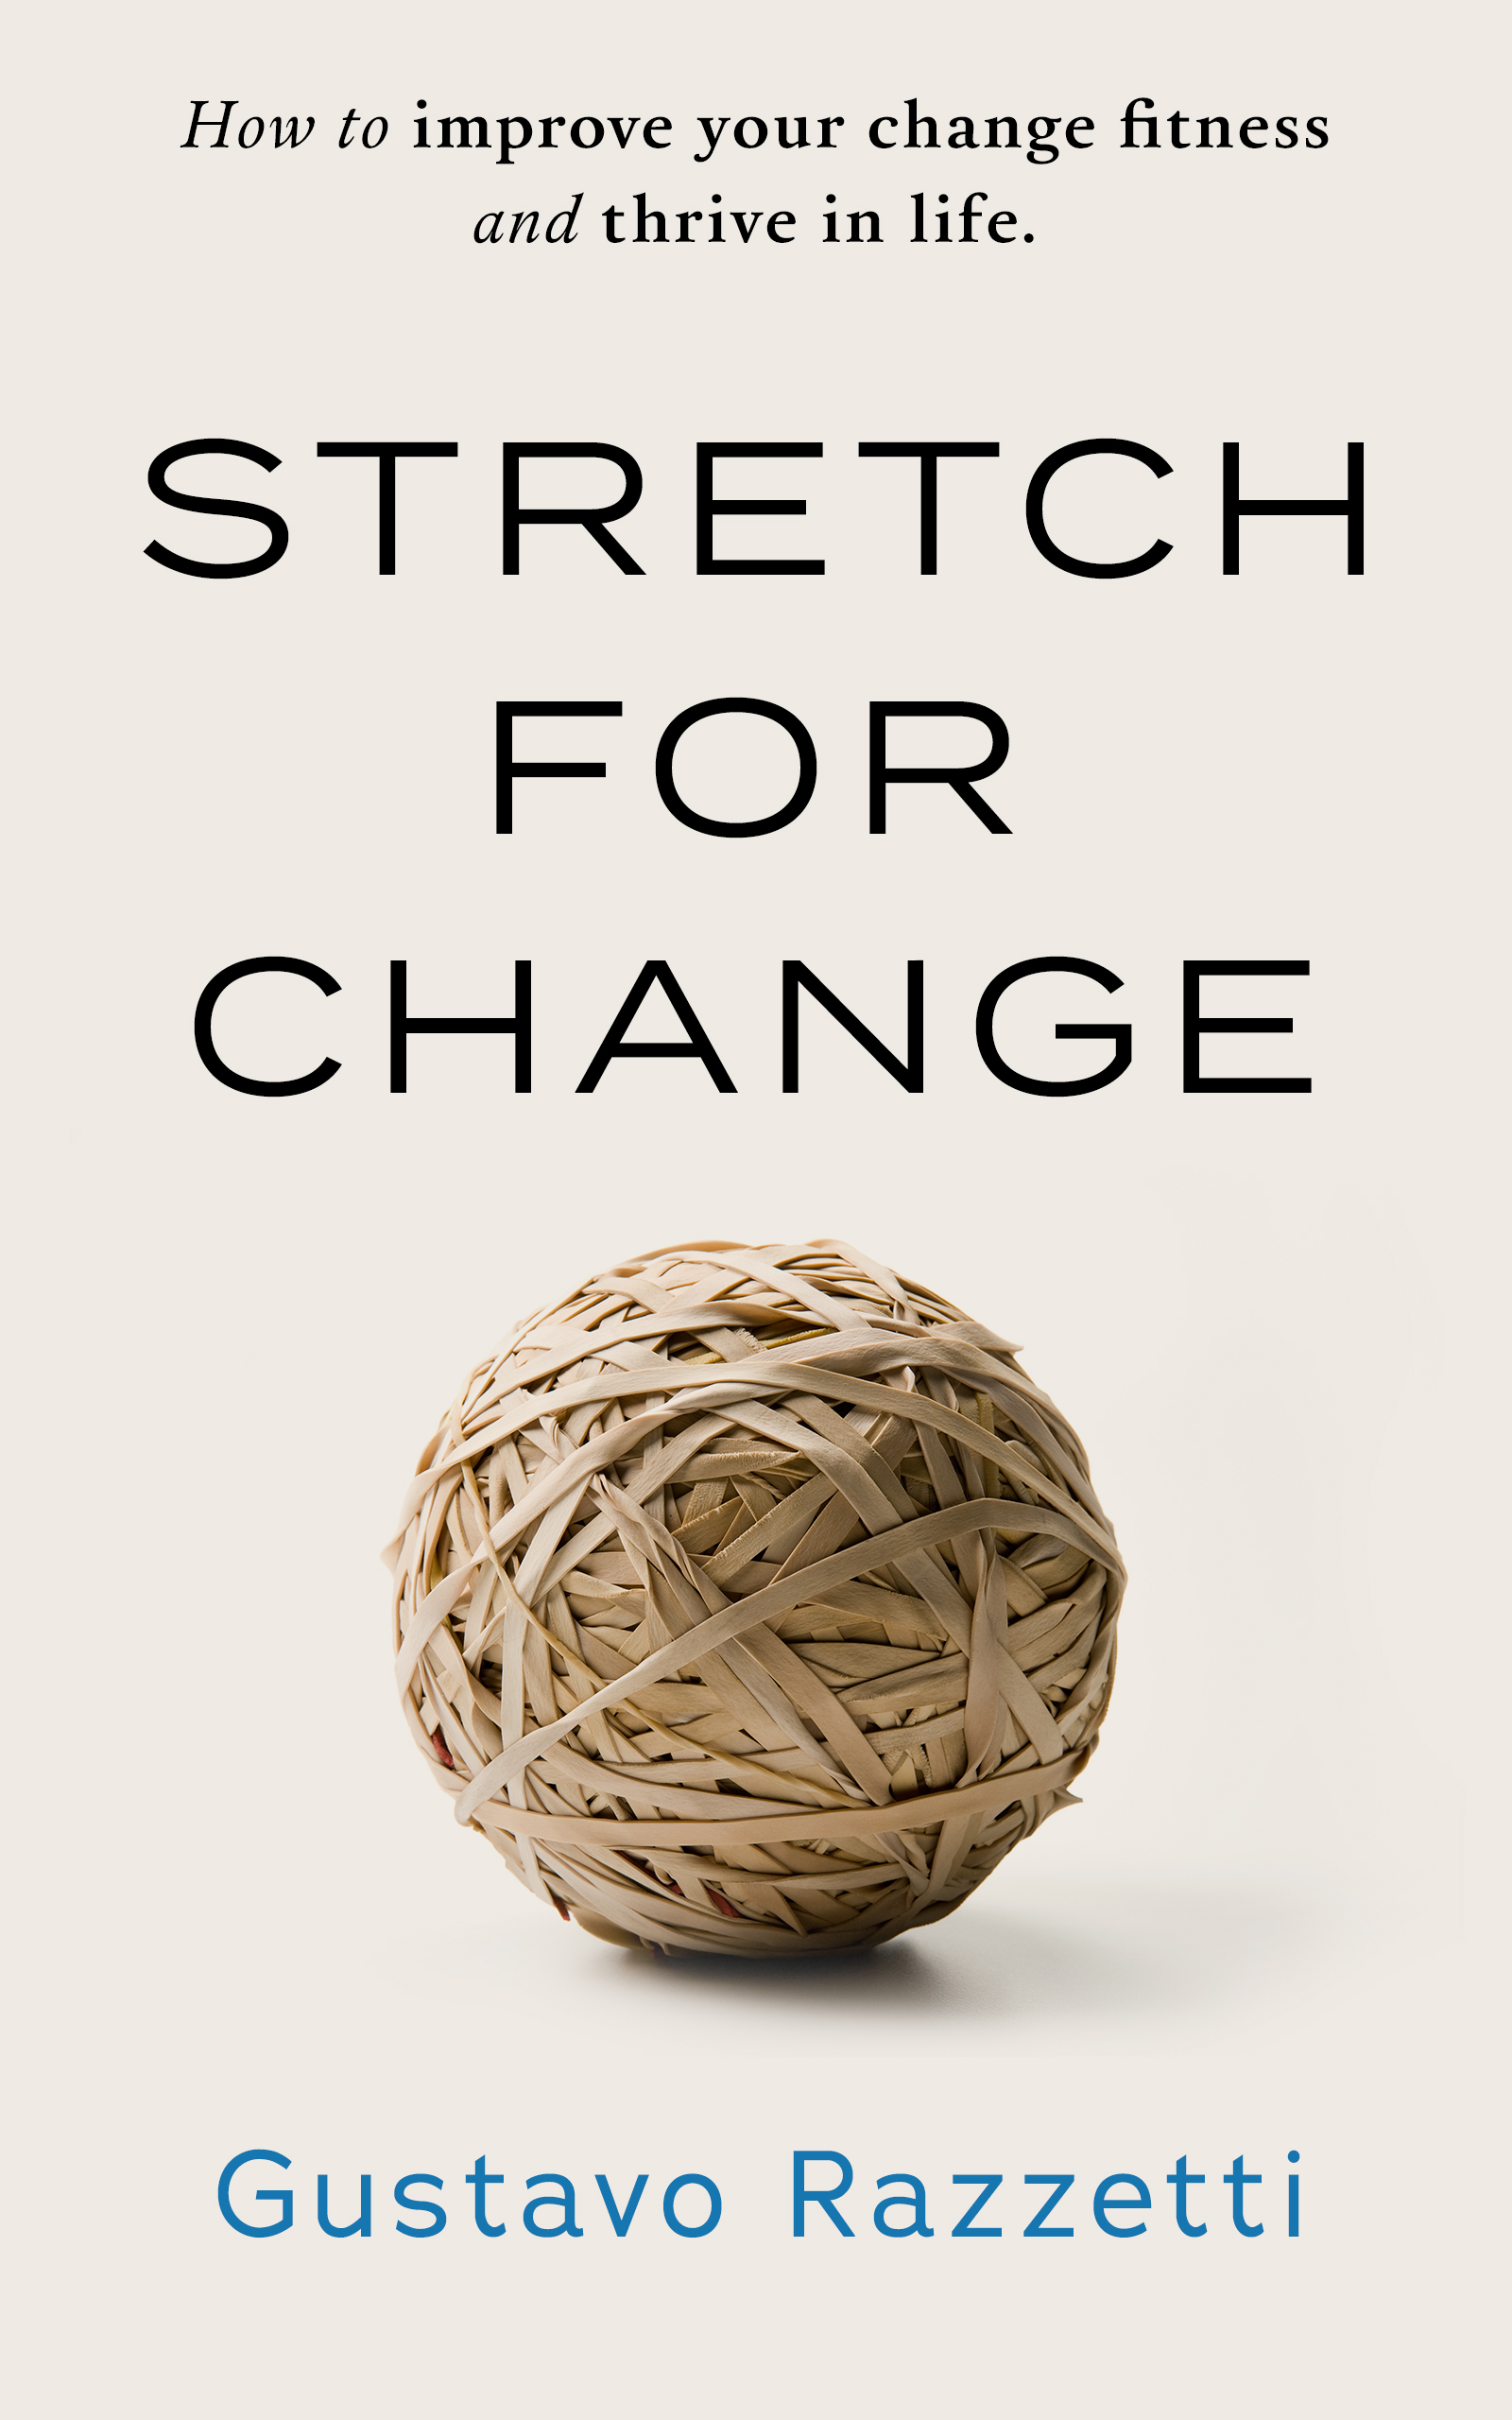 Stretch for Change Book by Gustavo Razzetti